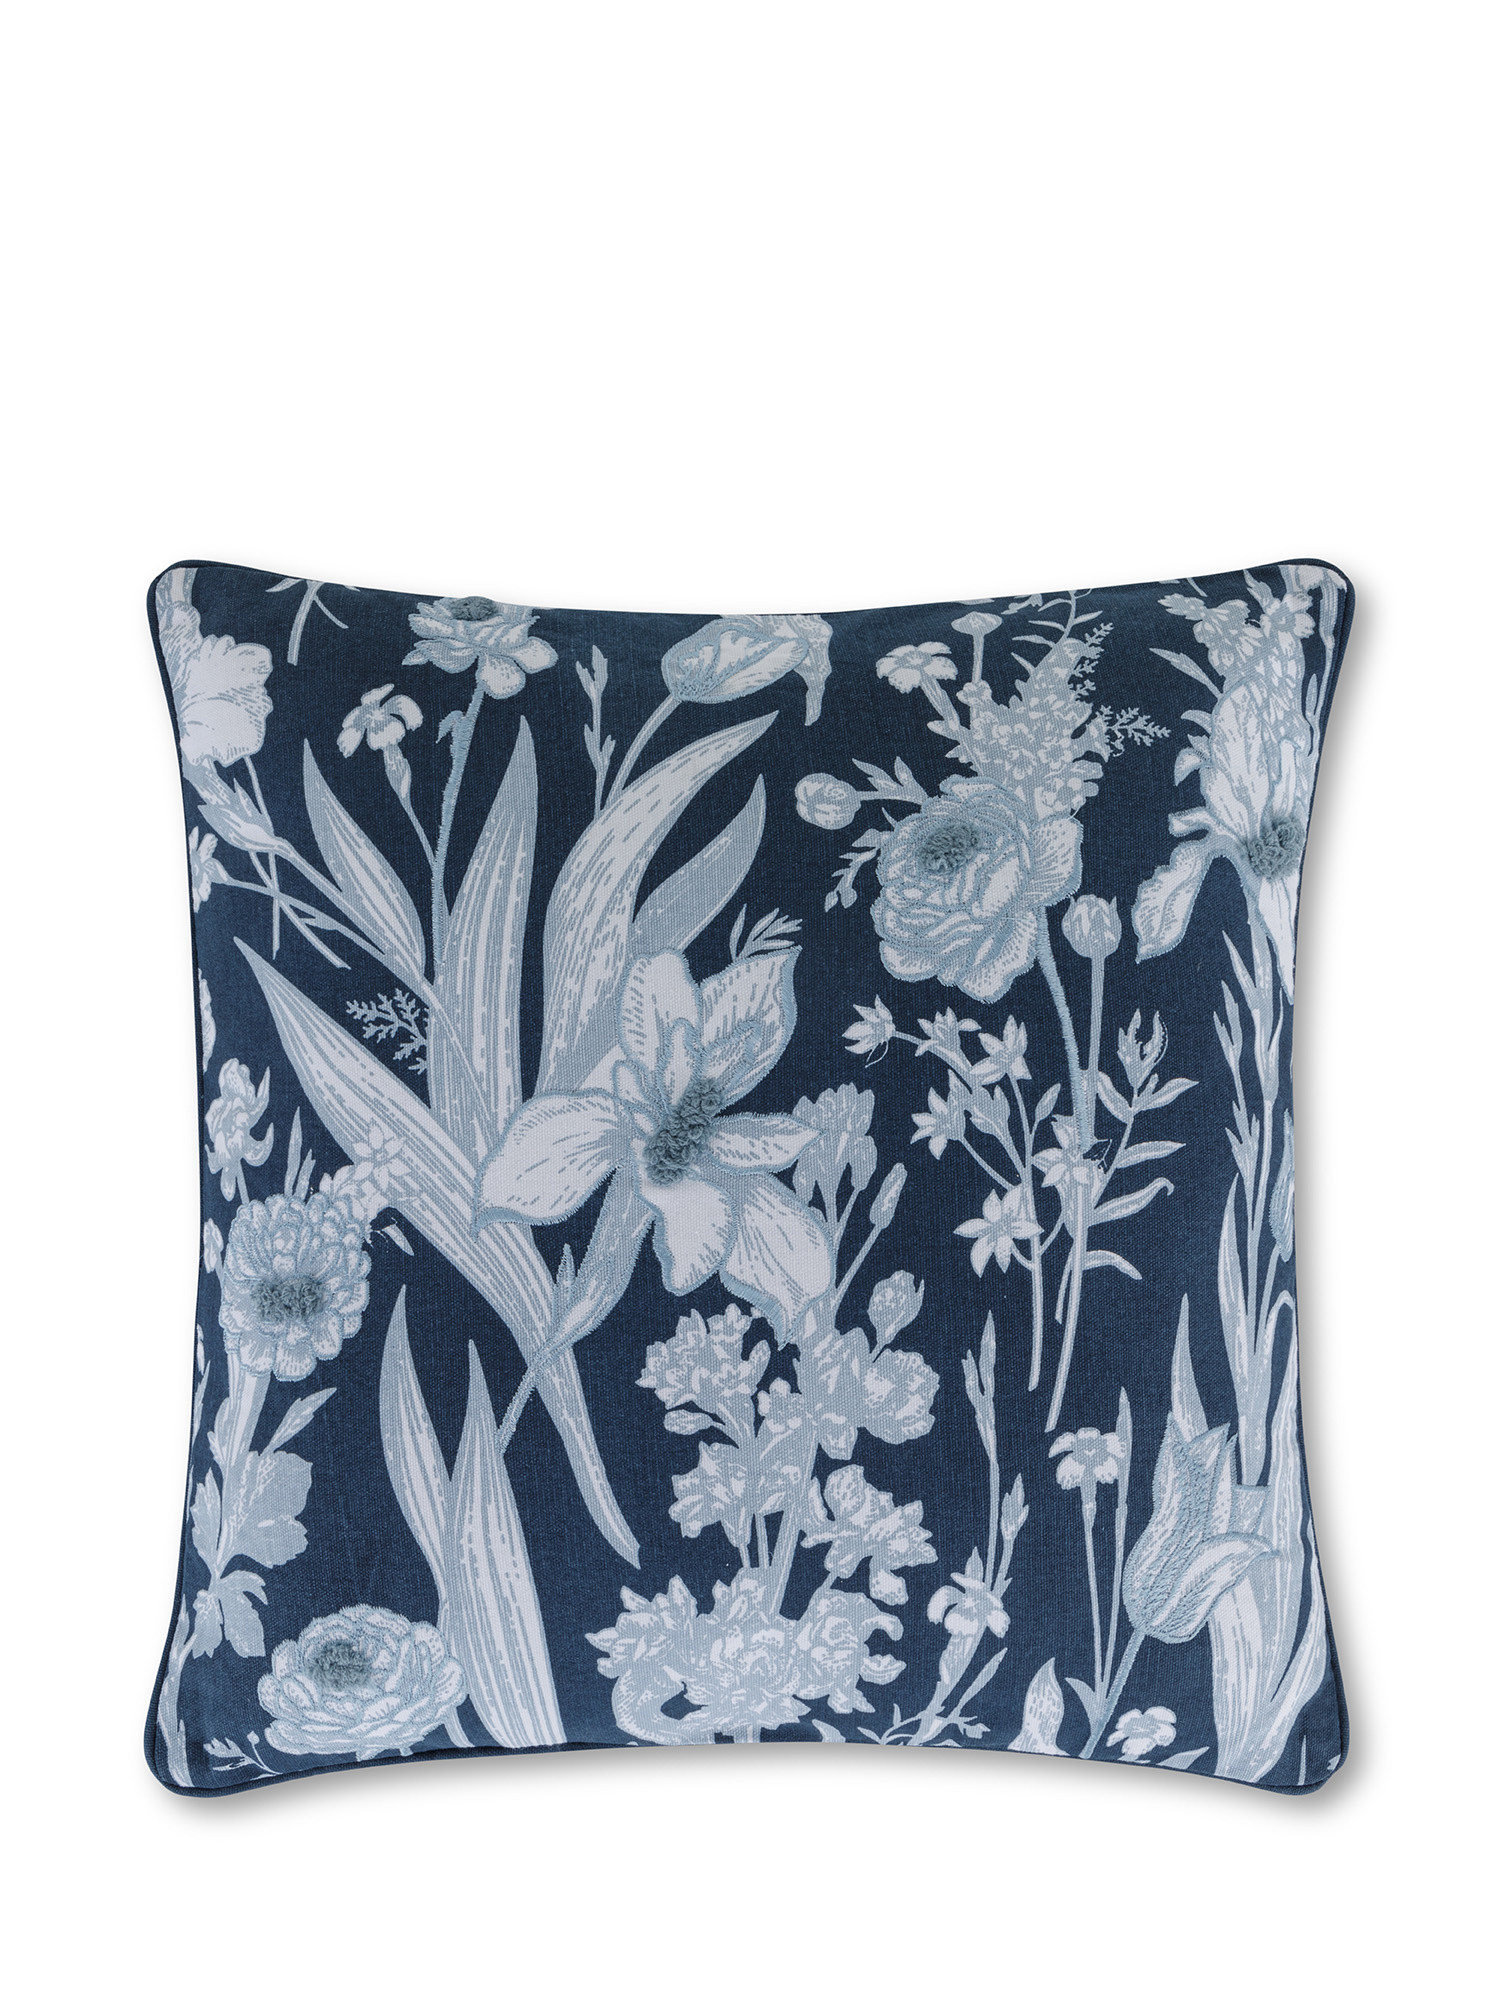 Cuscino con foglie ricamate 45x45 cm, Blu scuro, large image number 0